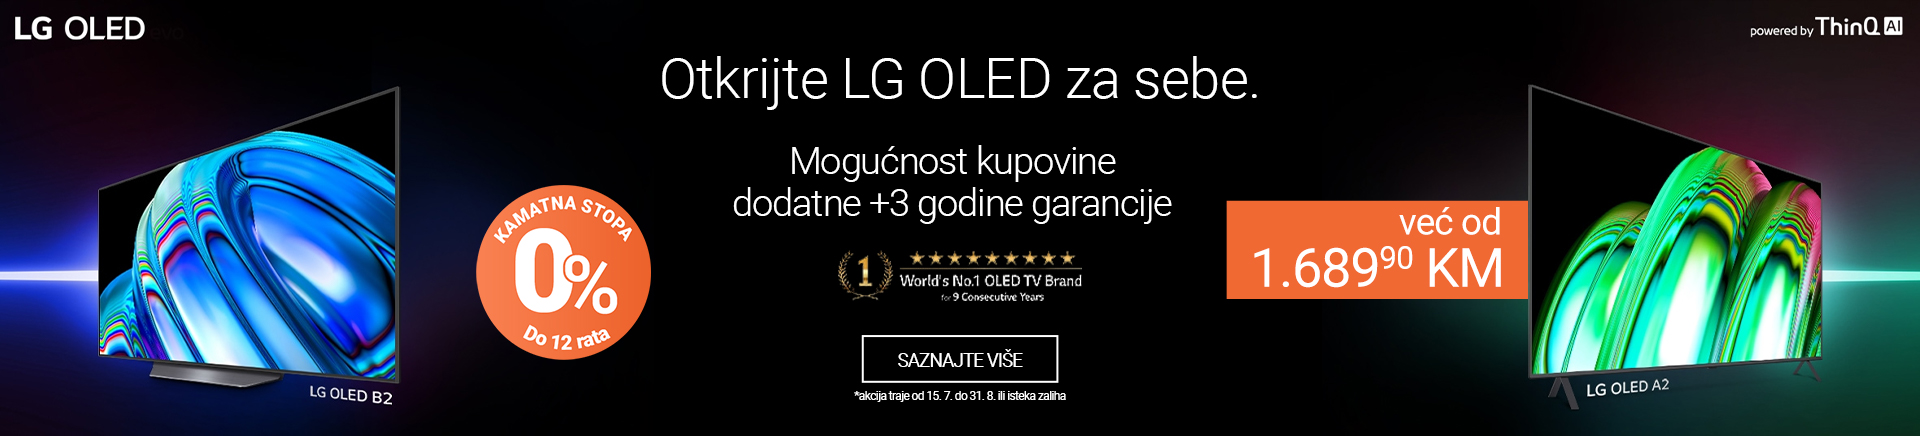 BiH LG OLED MOBILE 380 X 436.jpg